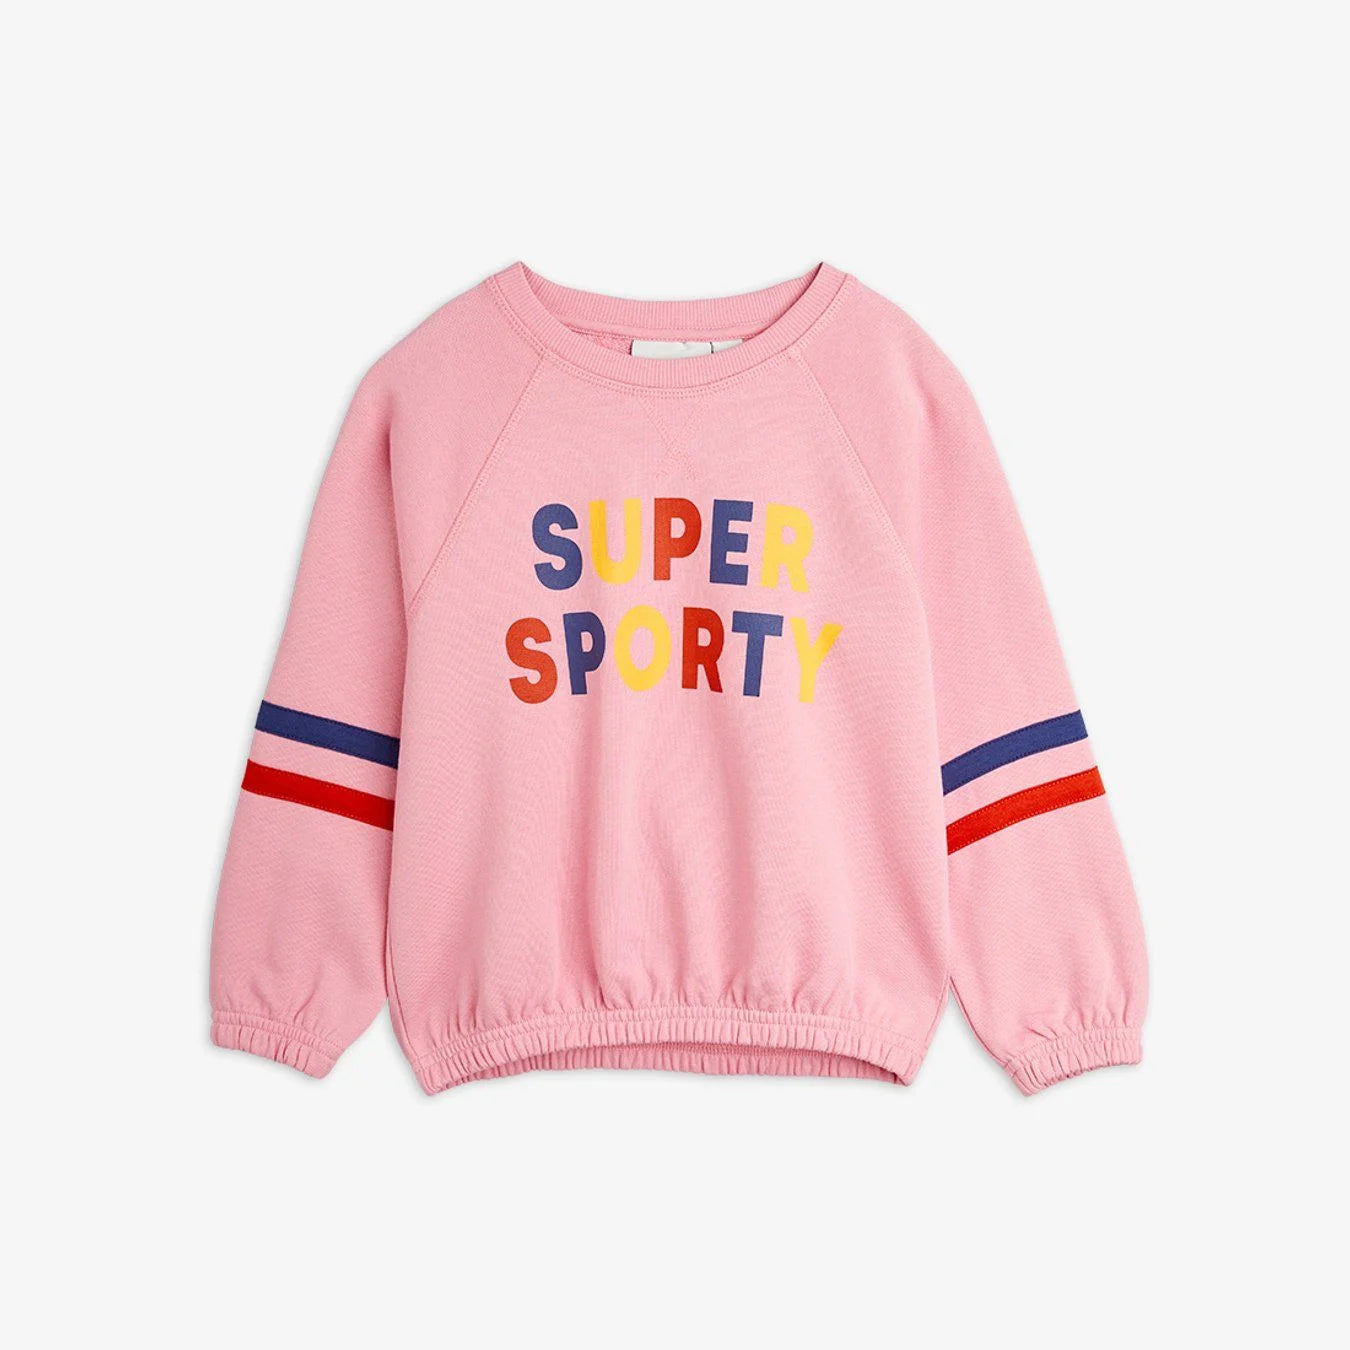 Mini Rodini - Super Sporty Sweatshirt